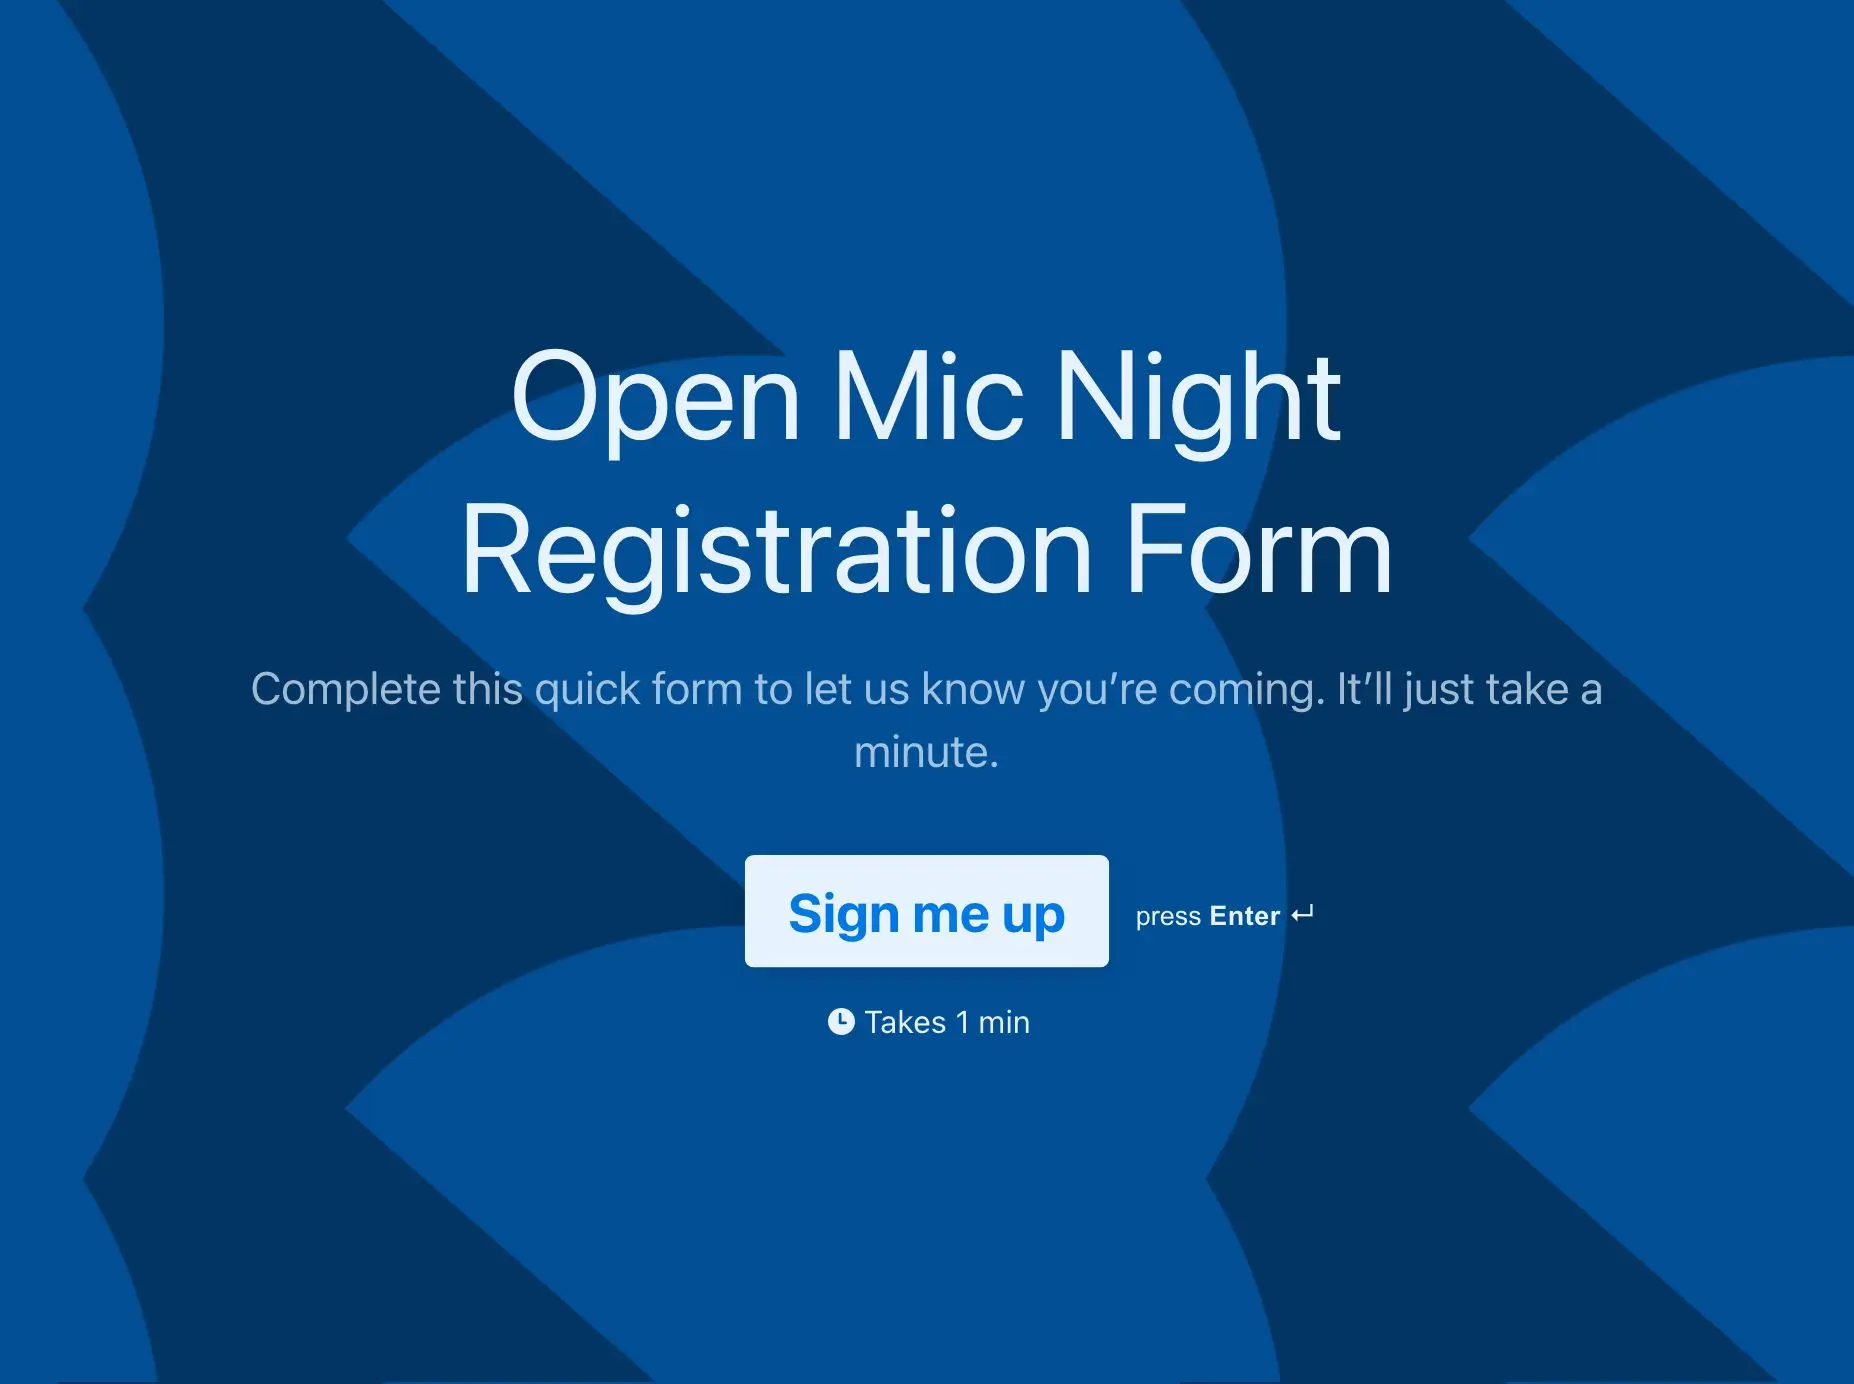 Open Mic Night Registration Form Template Hero